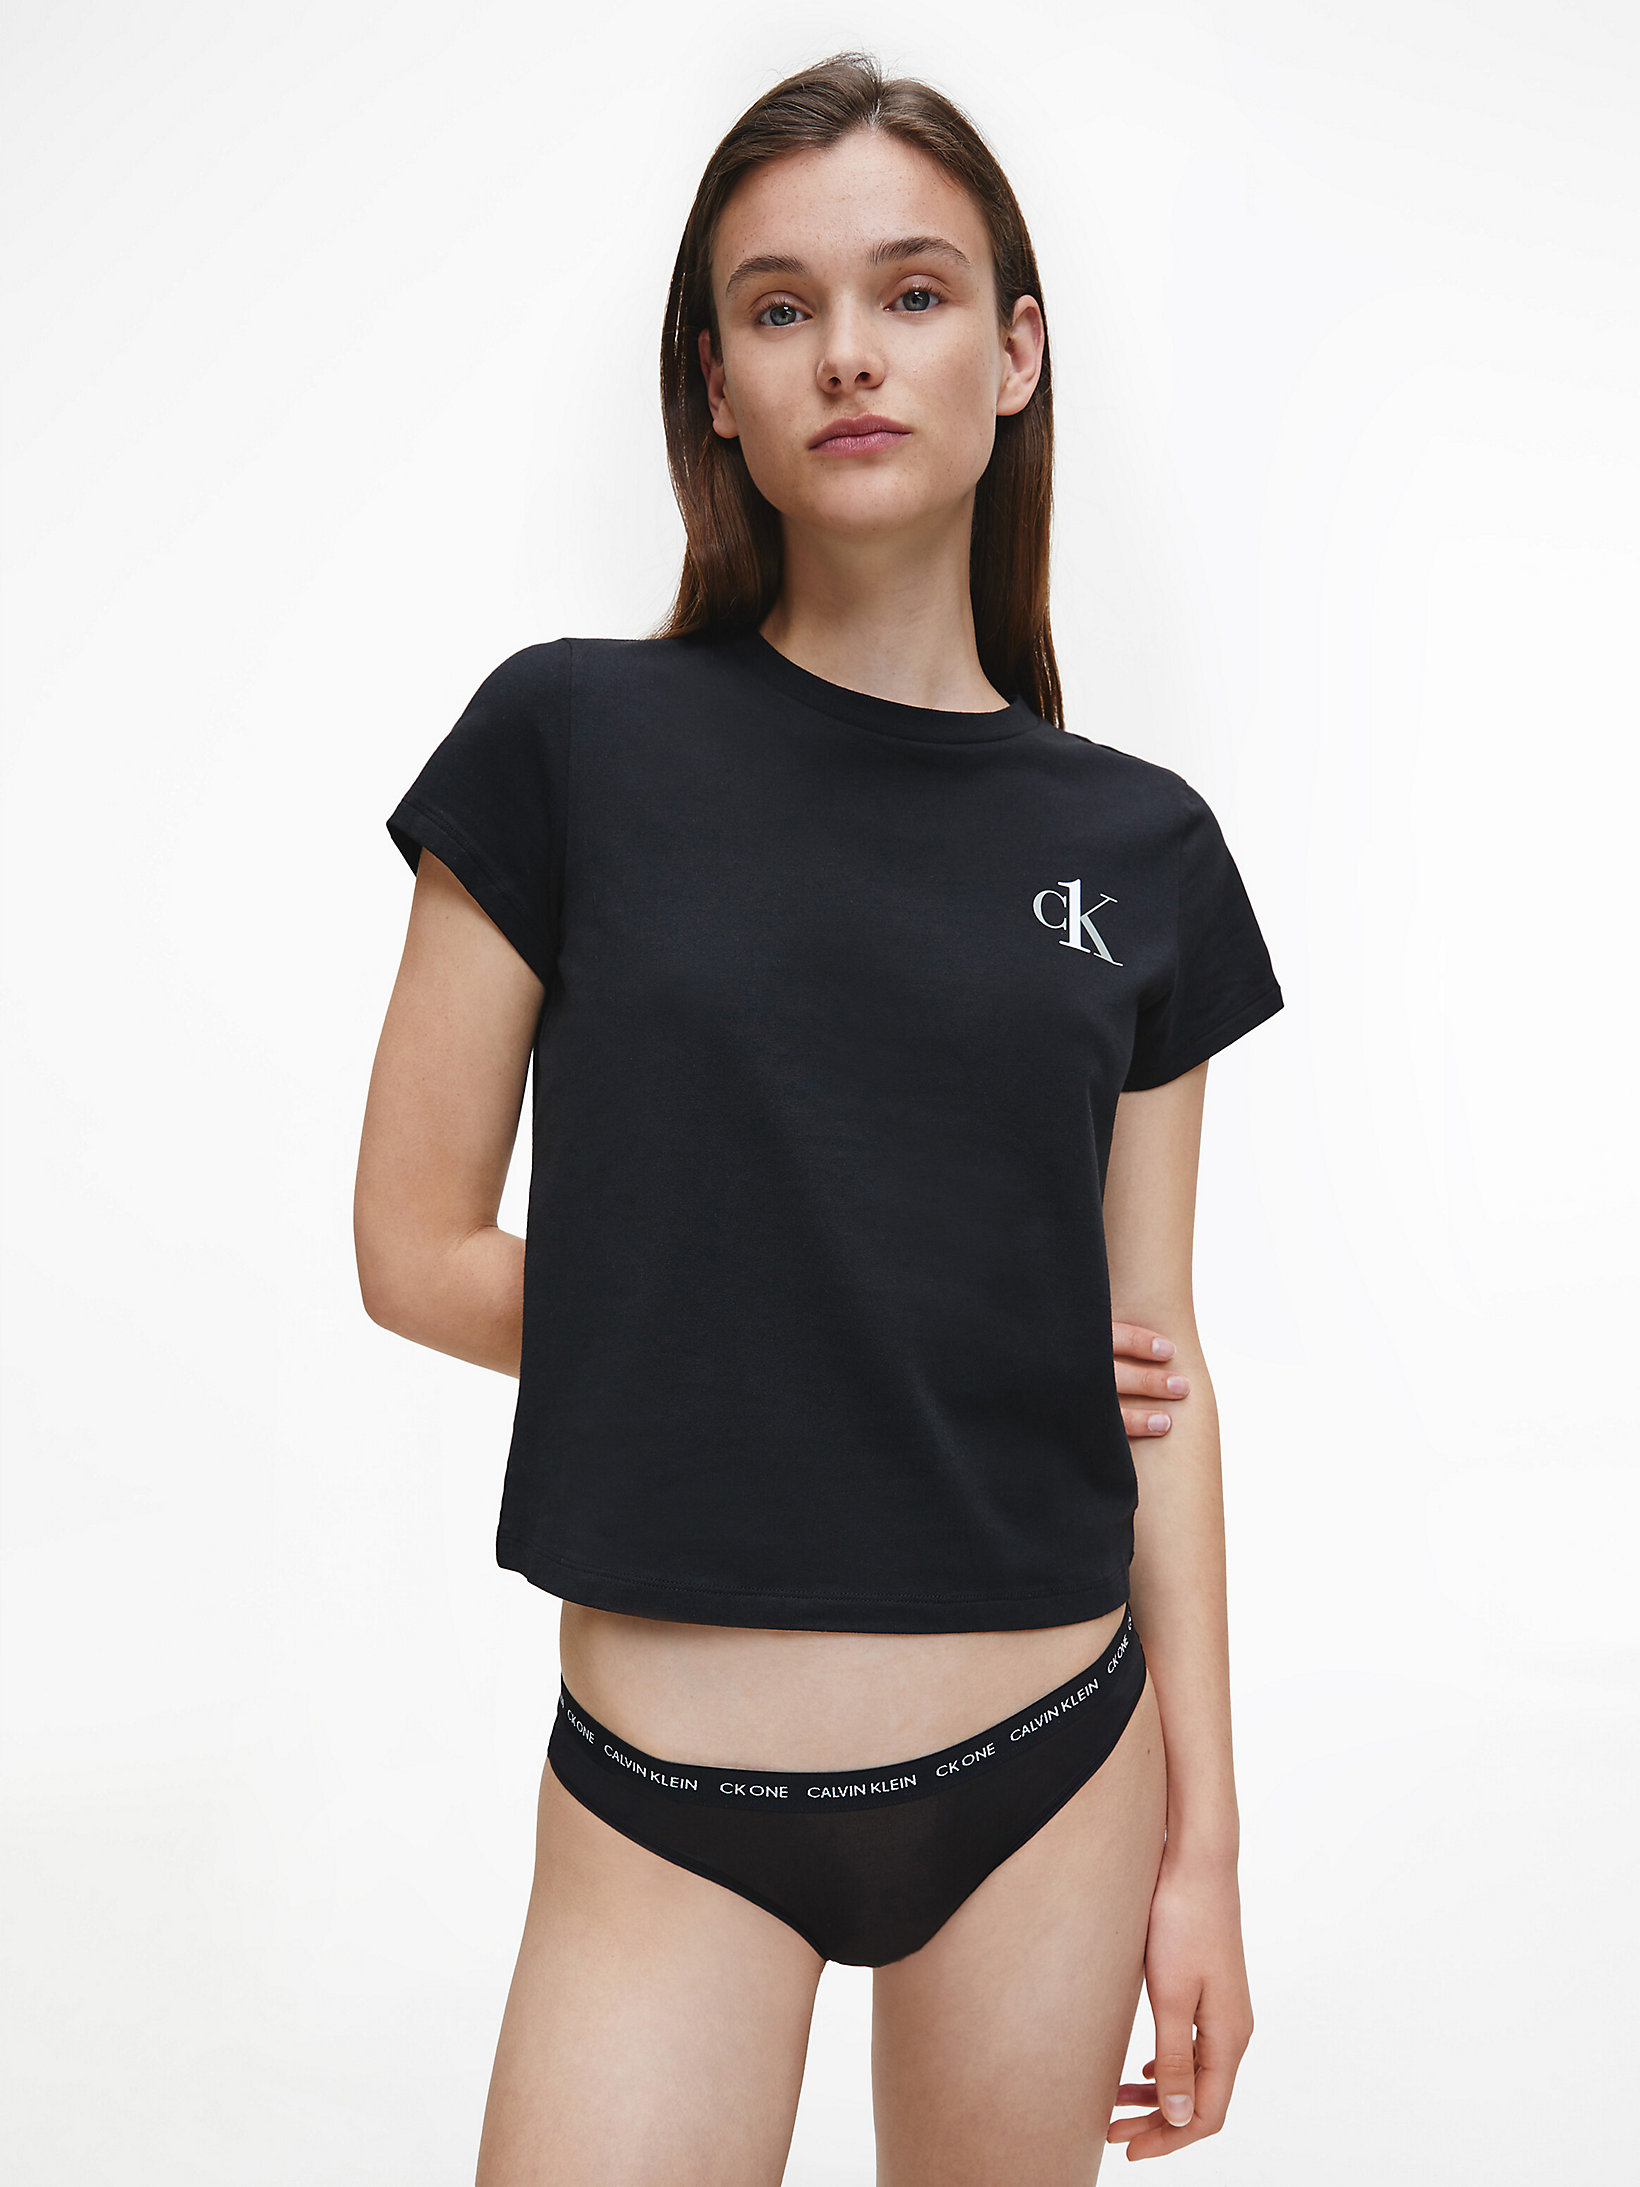 T-Shirt D'intérieur - CK One > Black > undefined femmes > Calvin Klein